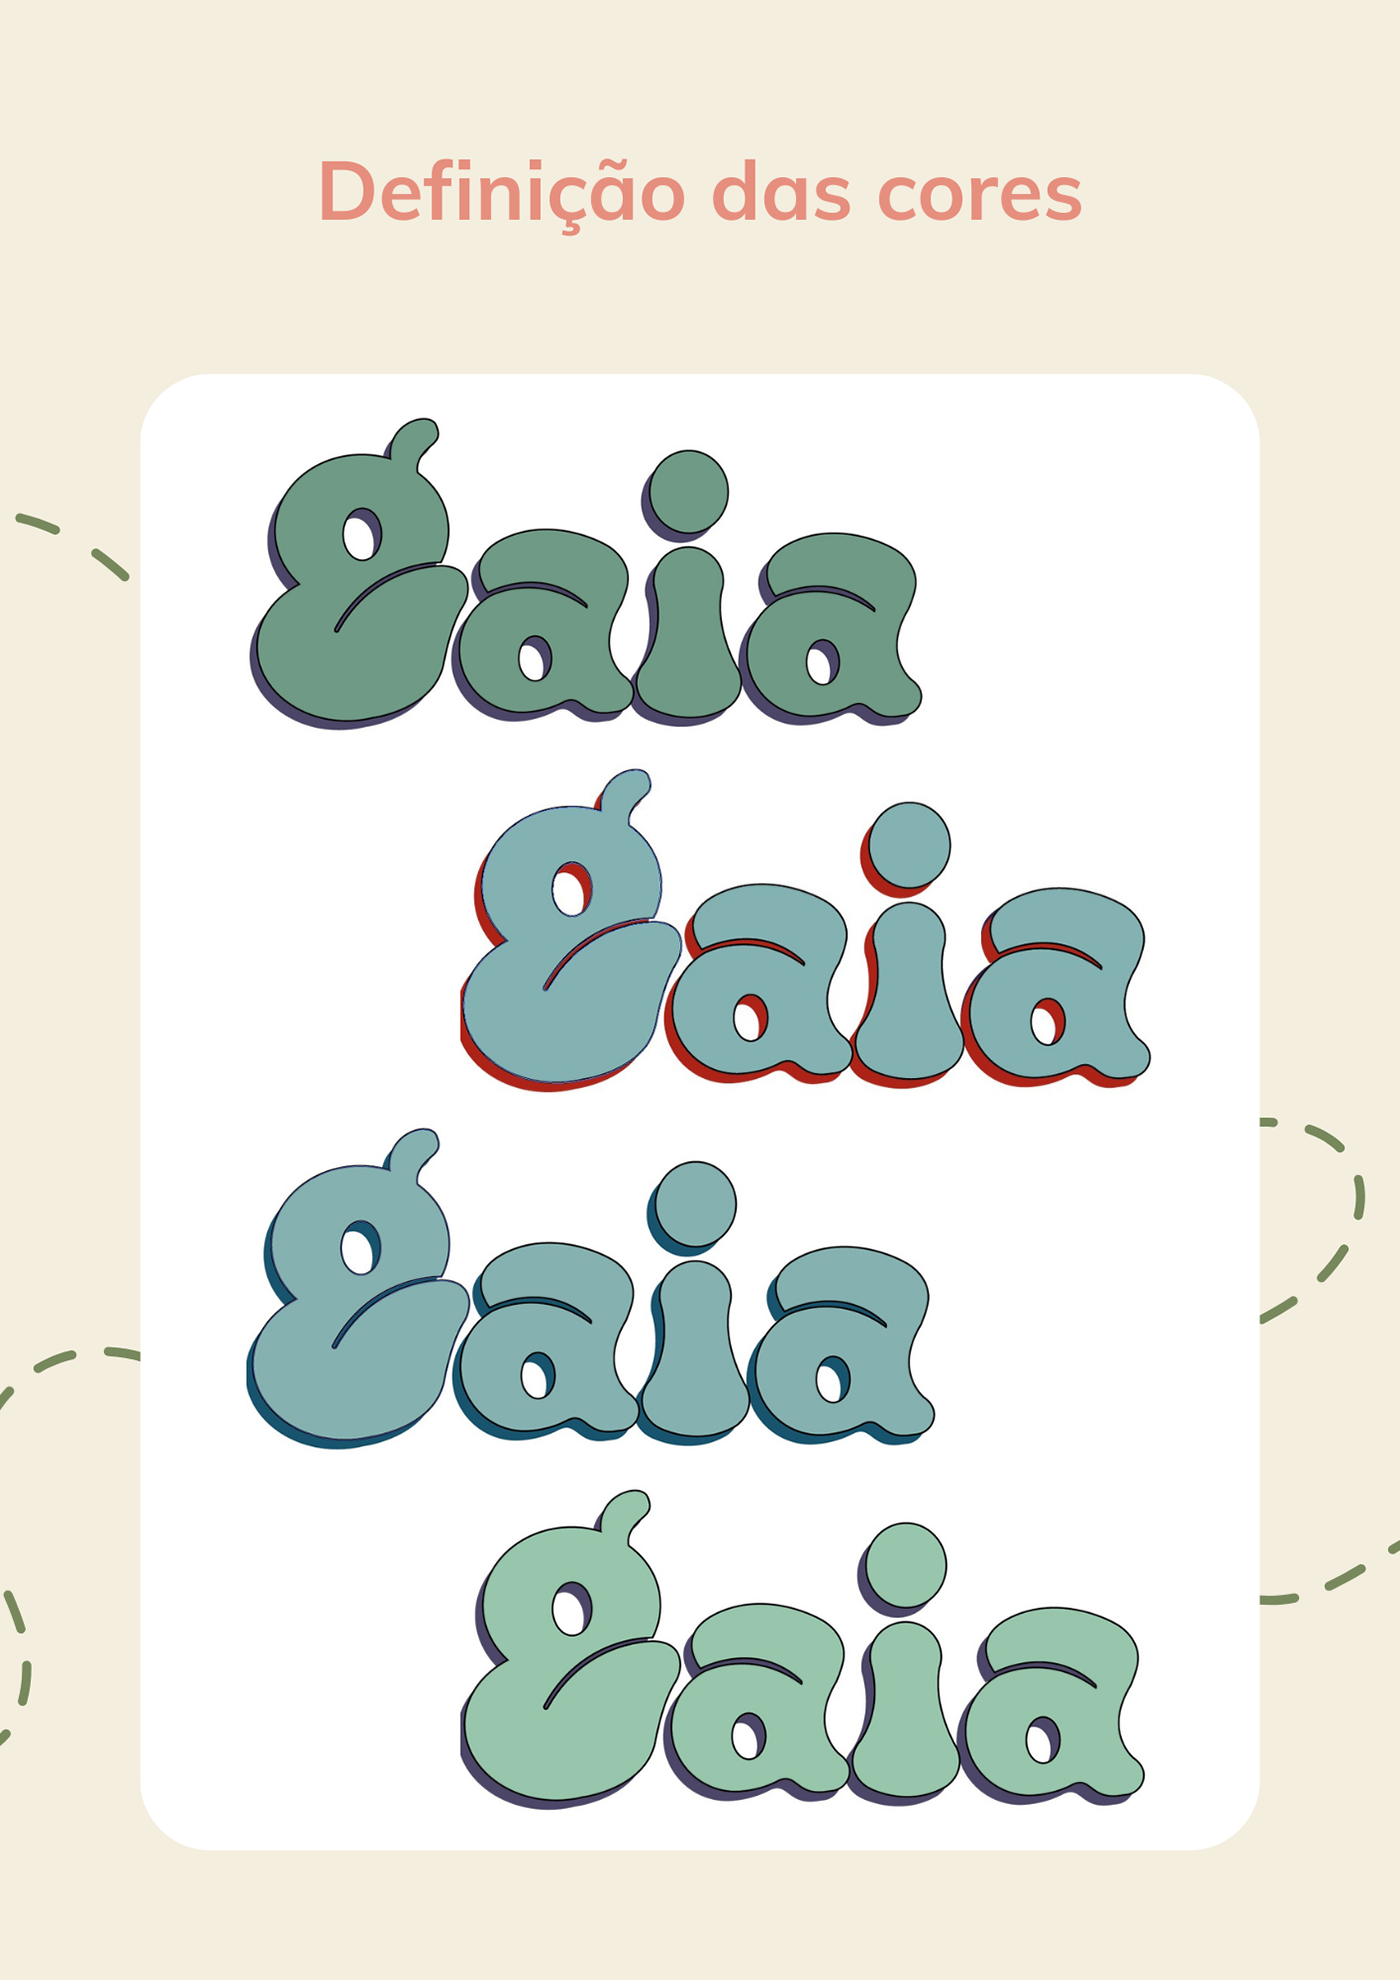 caderno Project Gaia identidade visual Logo Design brand identity Logotype research sketch brechó